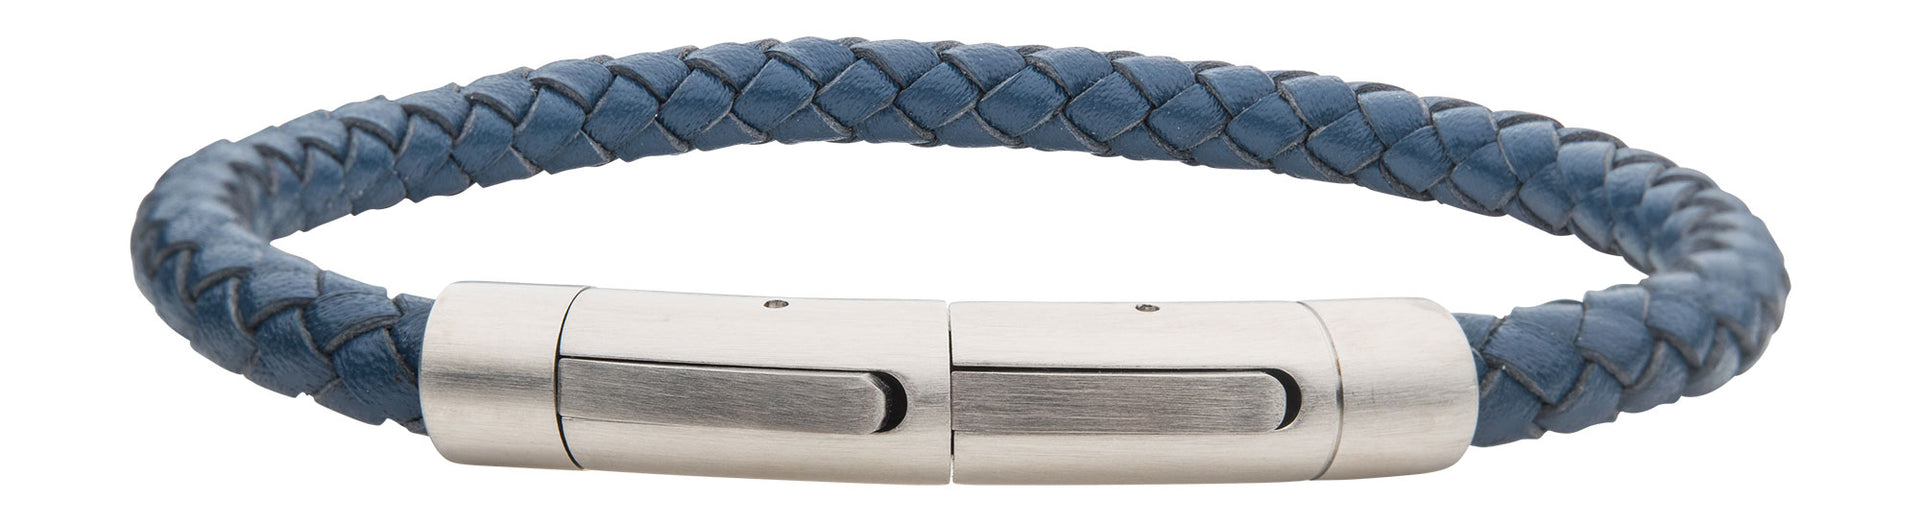 Stainless Steel 21cm Blue Leather Bracelet